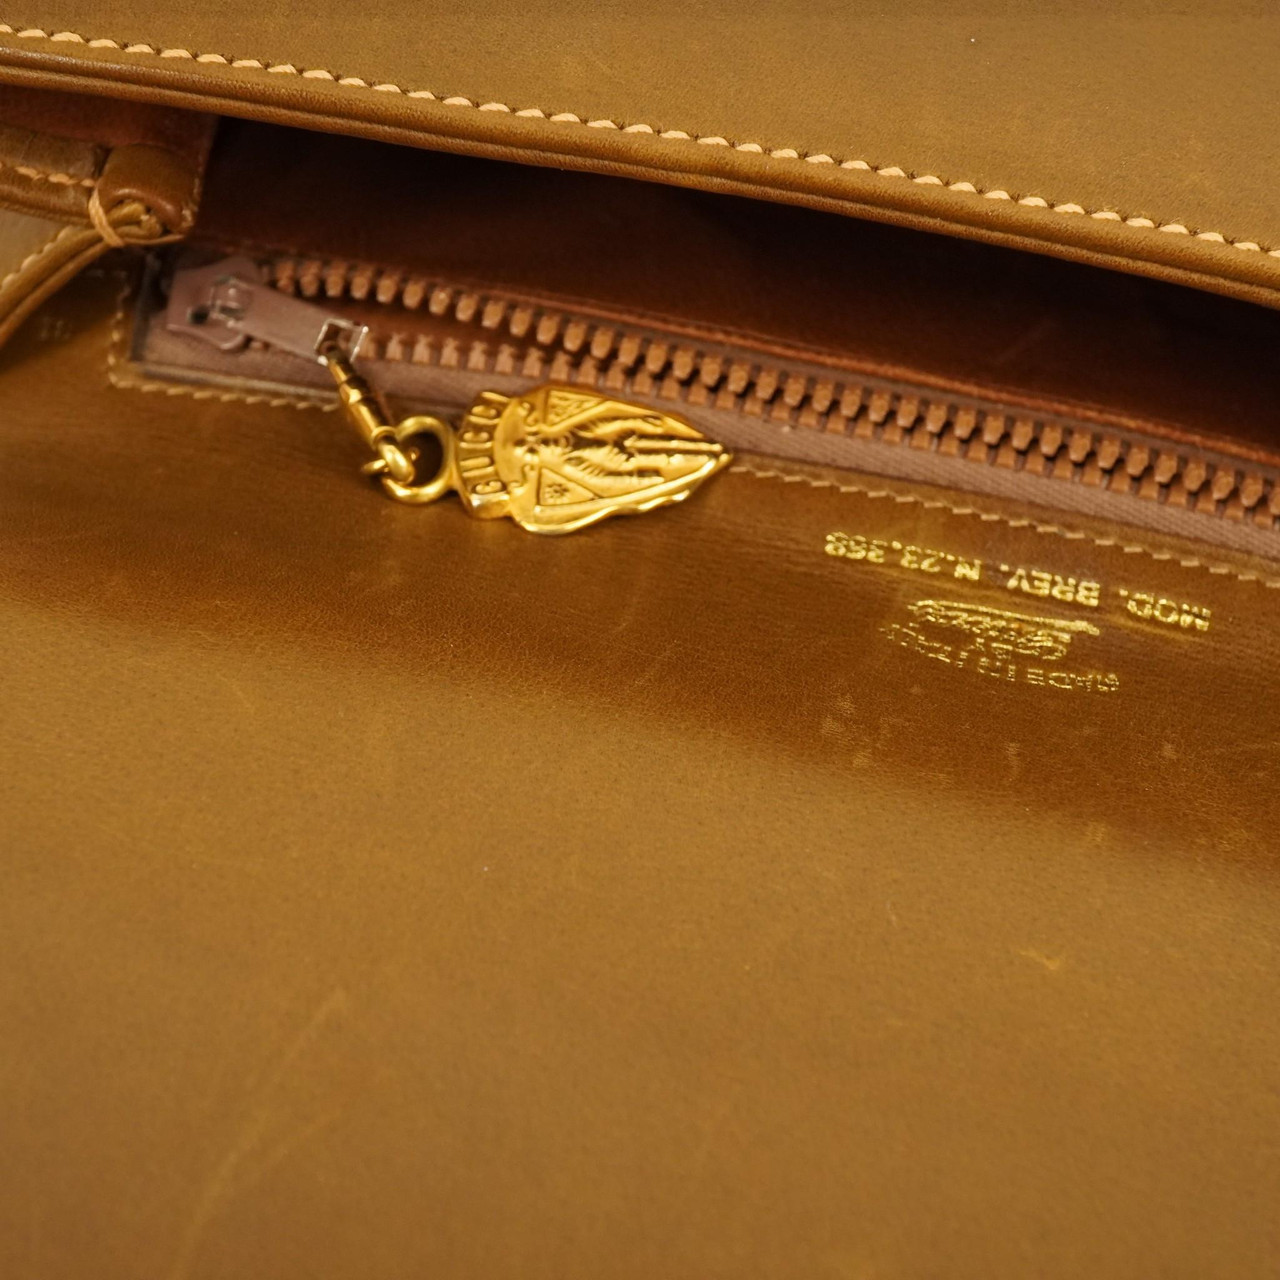 Louis Vuitton’s Yellow Small Box & Dust Bag